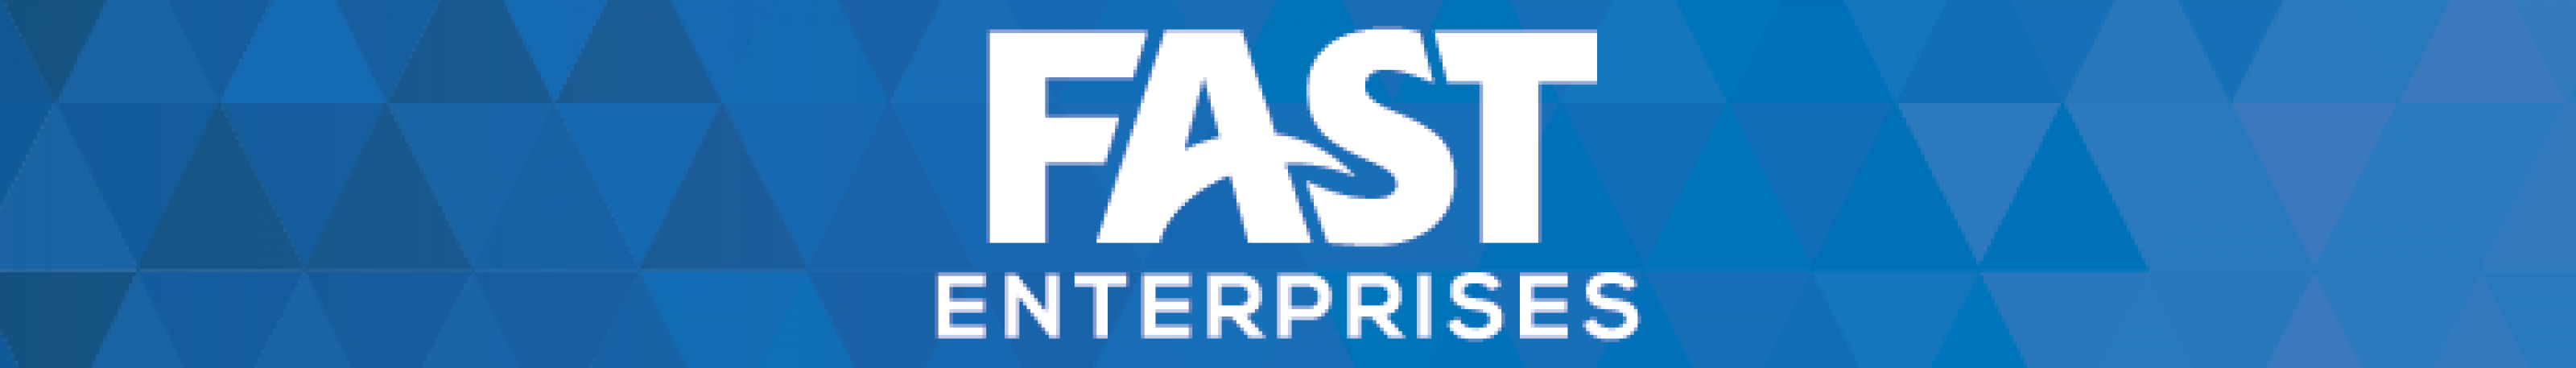 FAST Enterprises' Sponsor Ad